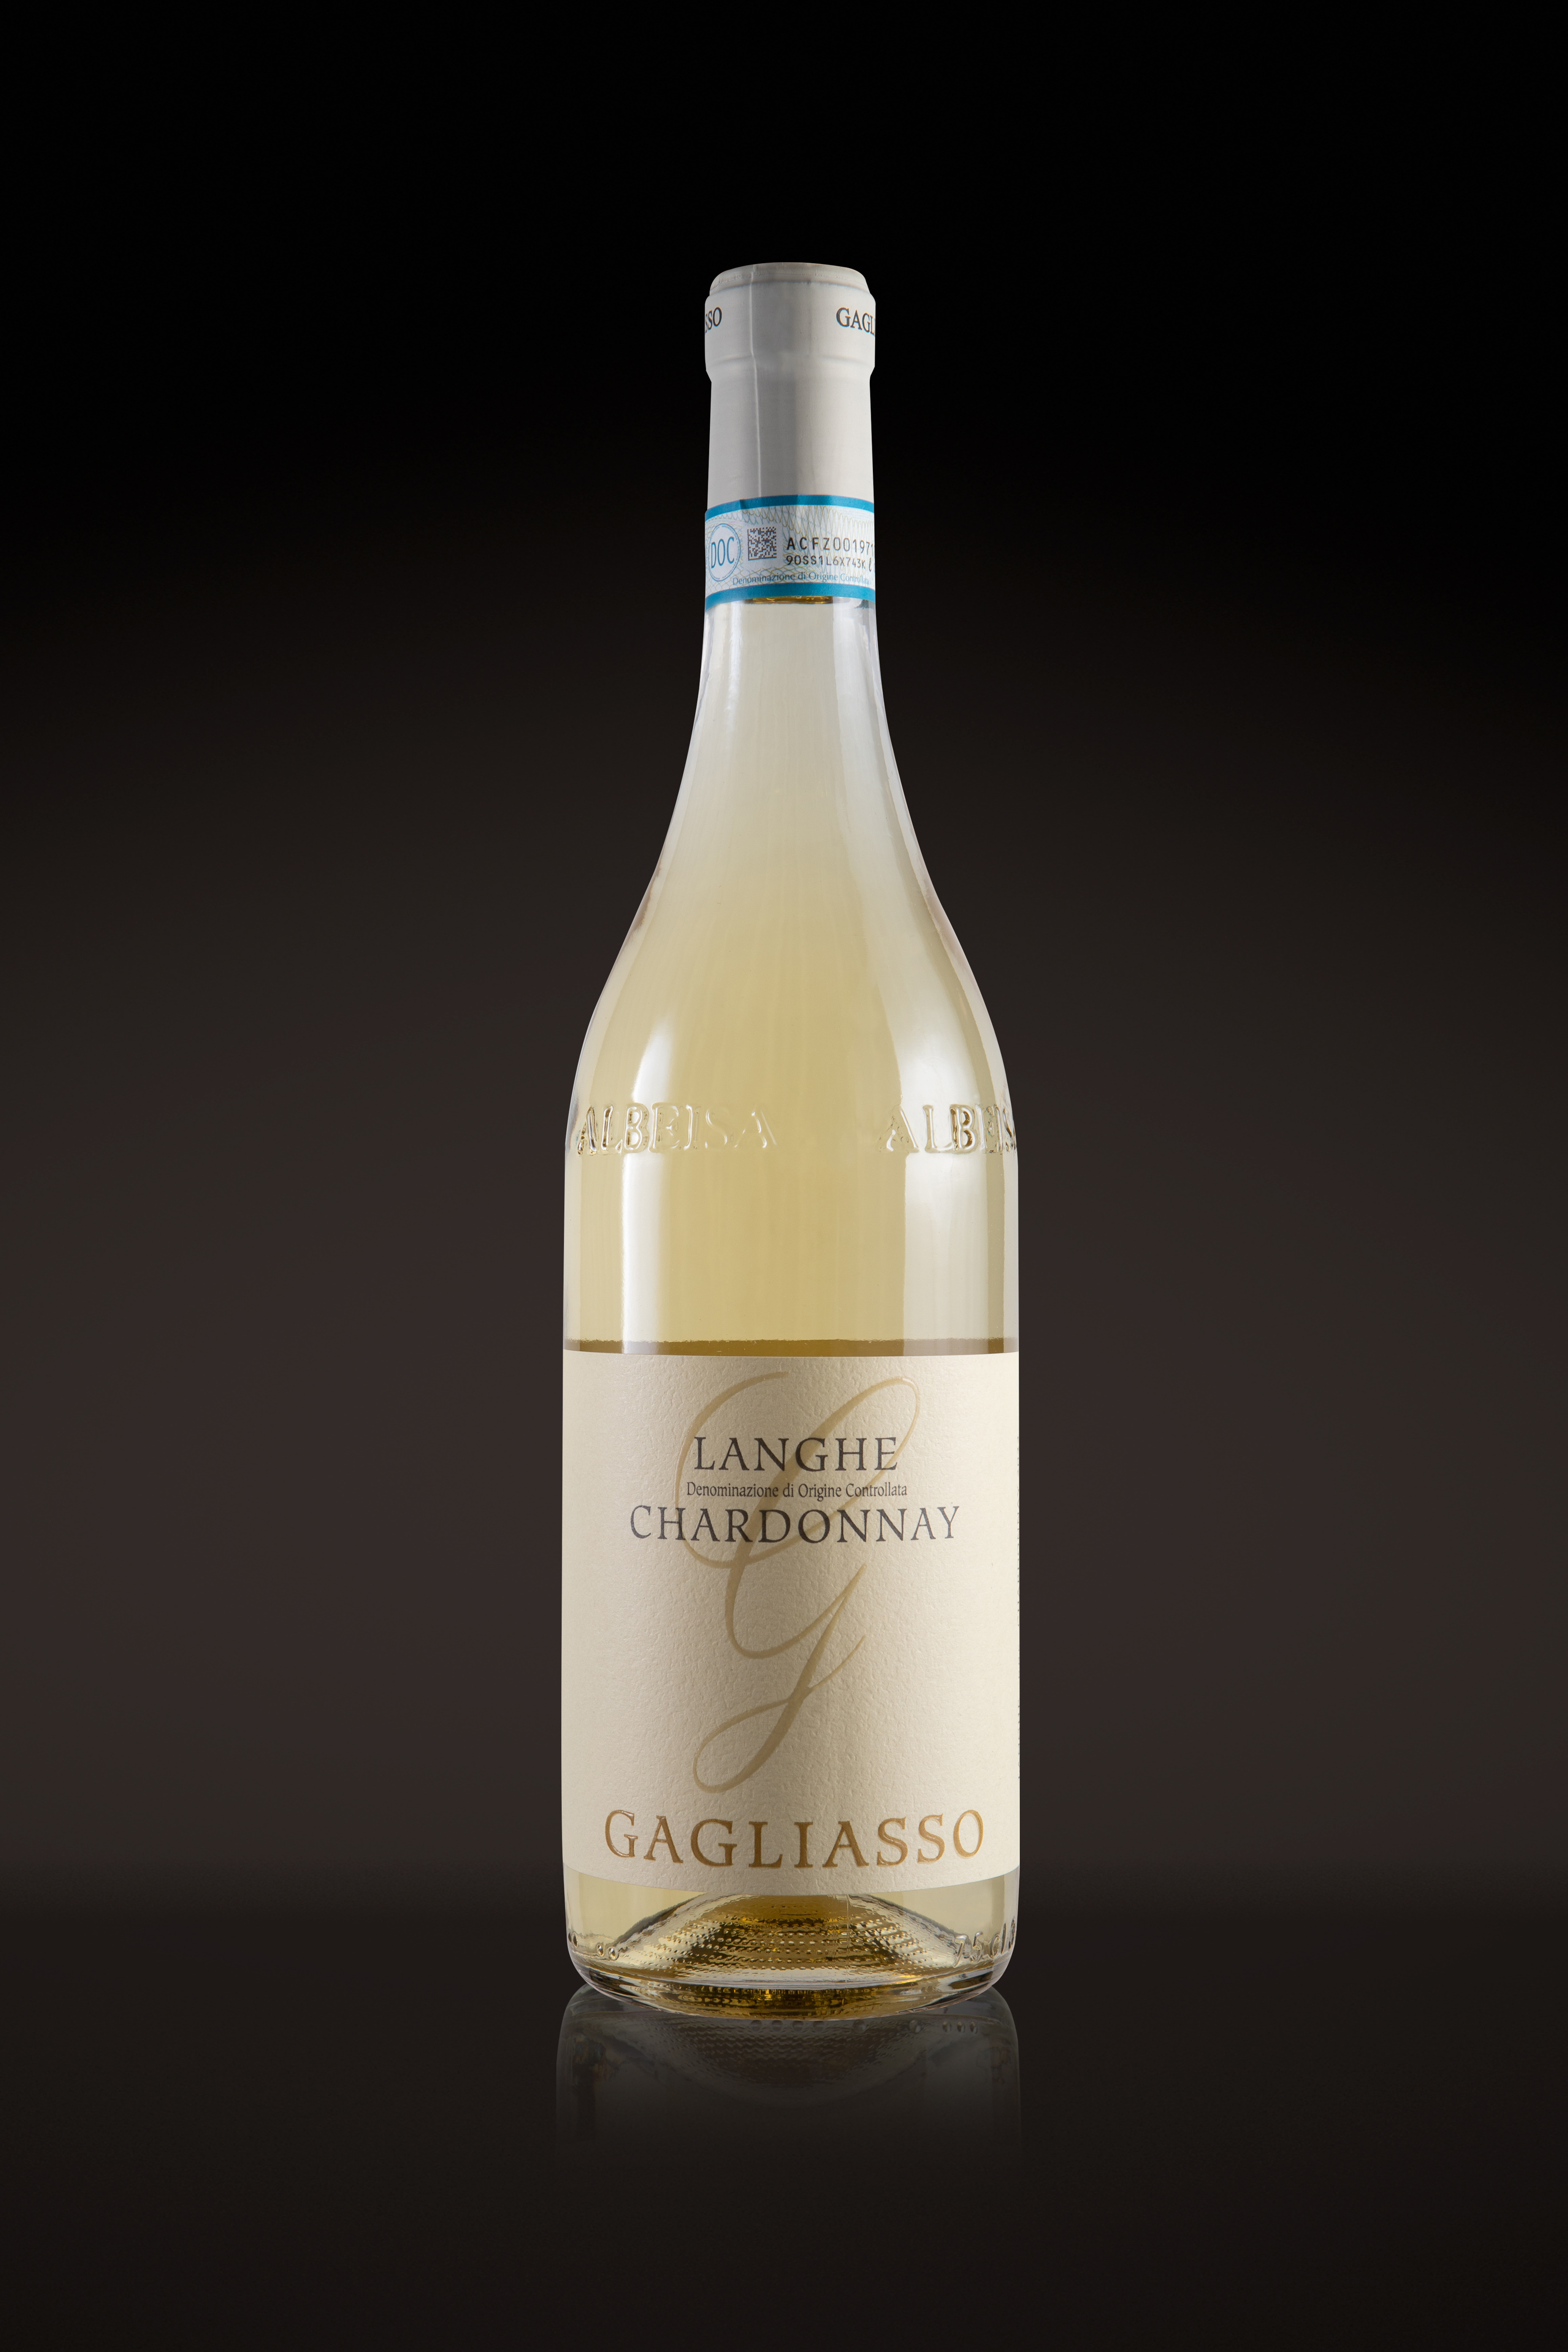 Langhe-Chardonnay-gagliasso-la-morra